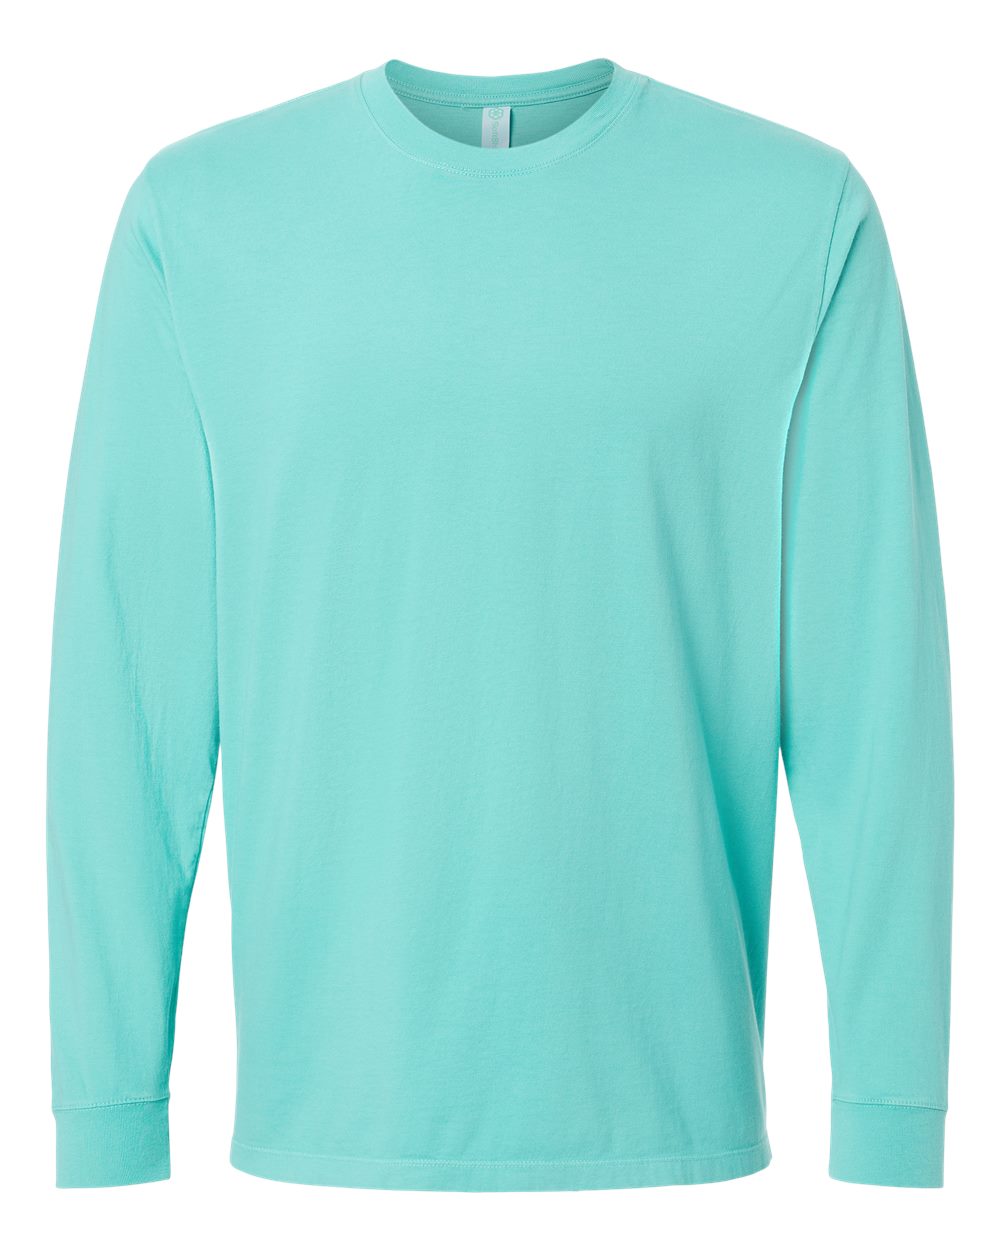 Softshirts® Unisex Organic Cotton Long-Sleeve Shirt in seafoam